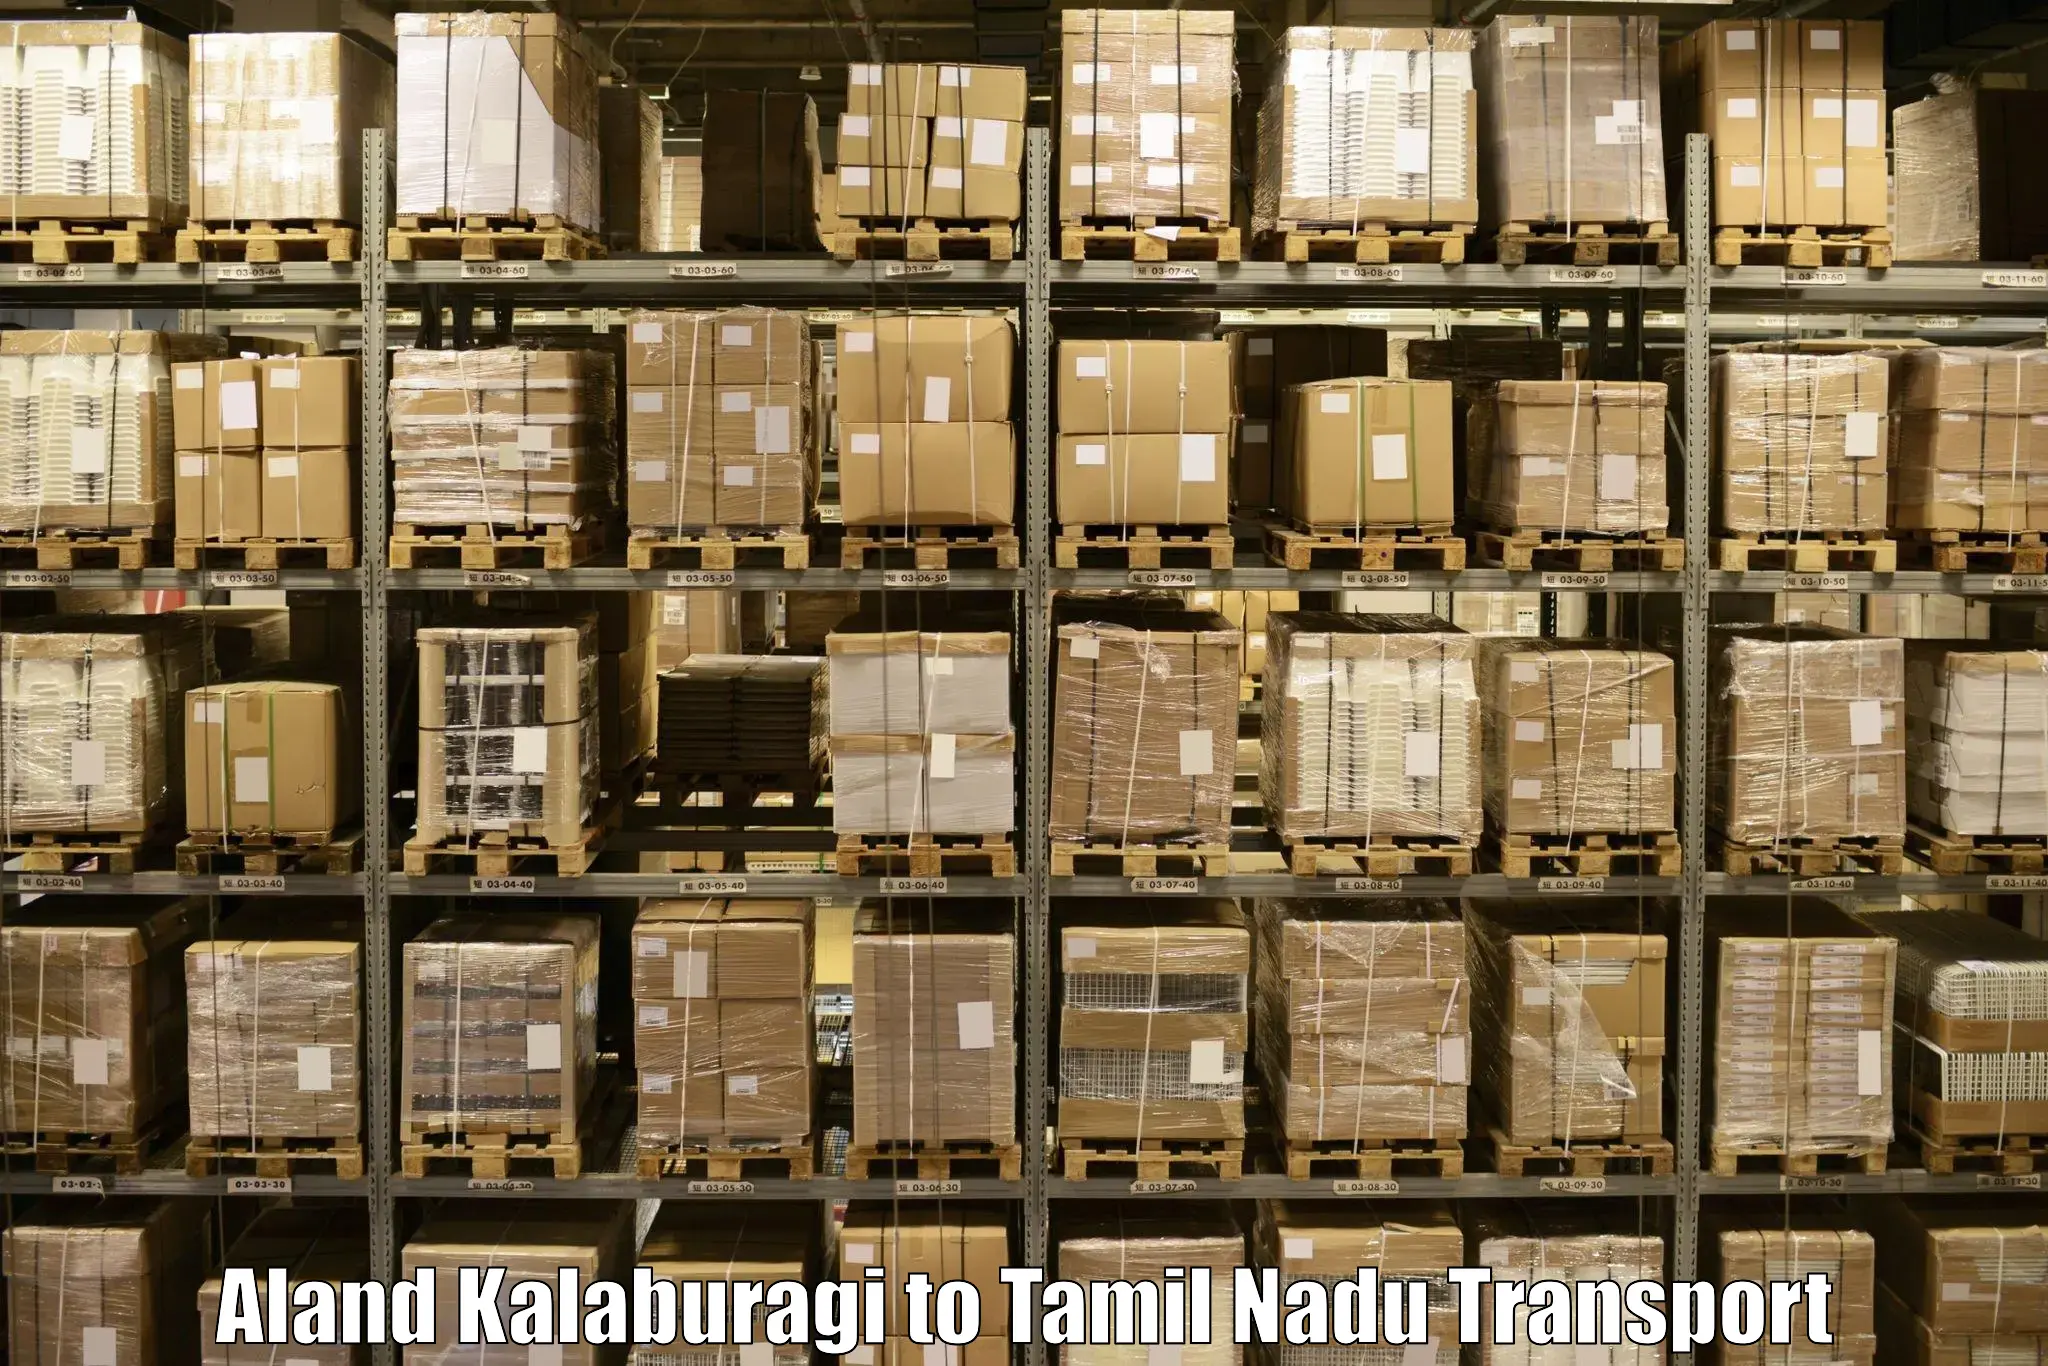 Transport shared services Aland Kalaburagi to Gujiliamparai